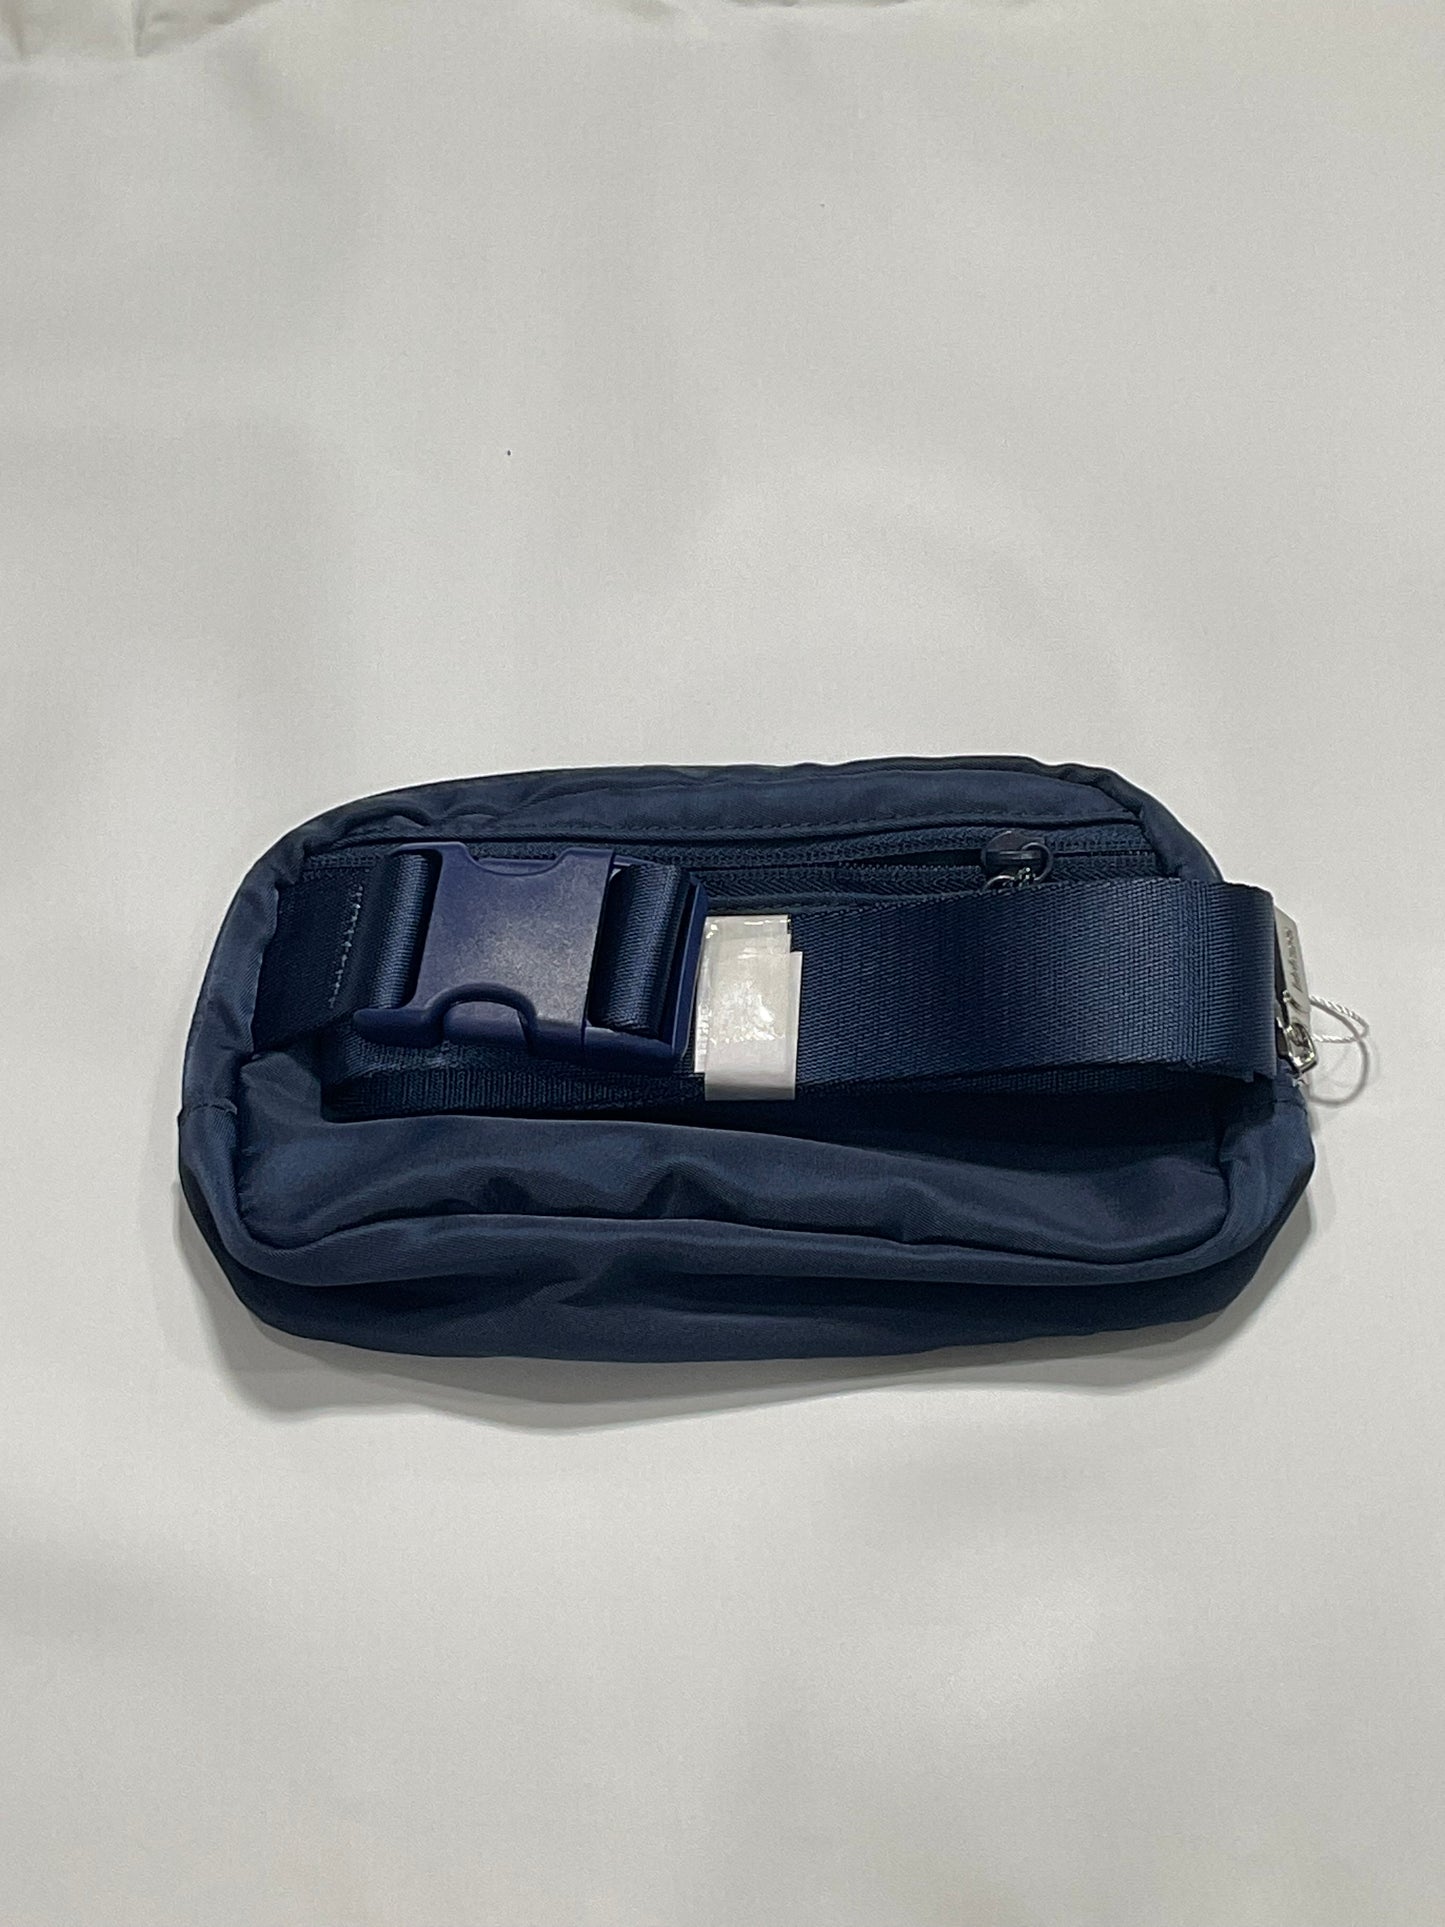 Lululemon Everywhere Belt Bag 1L - Navy Blue